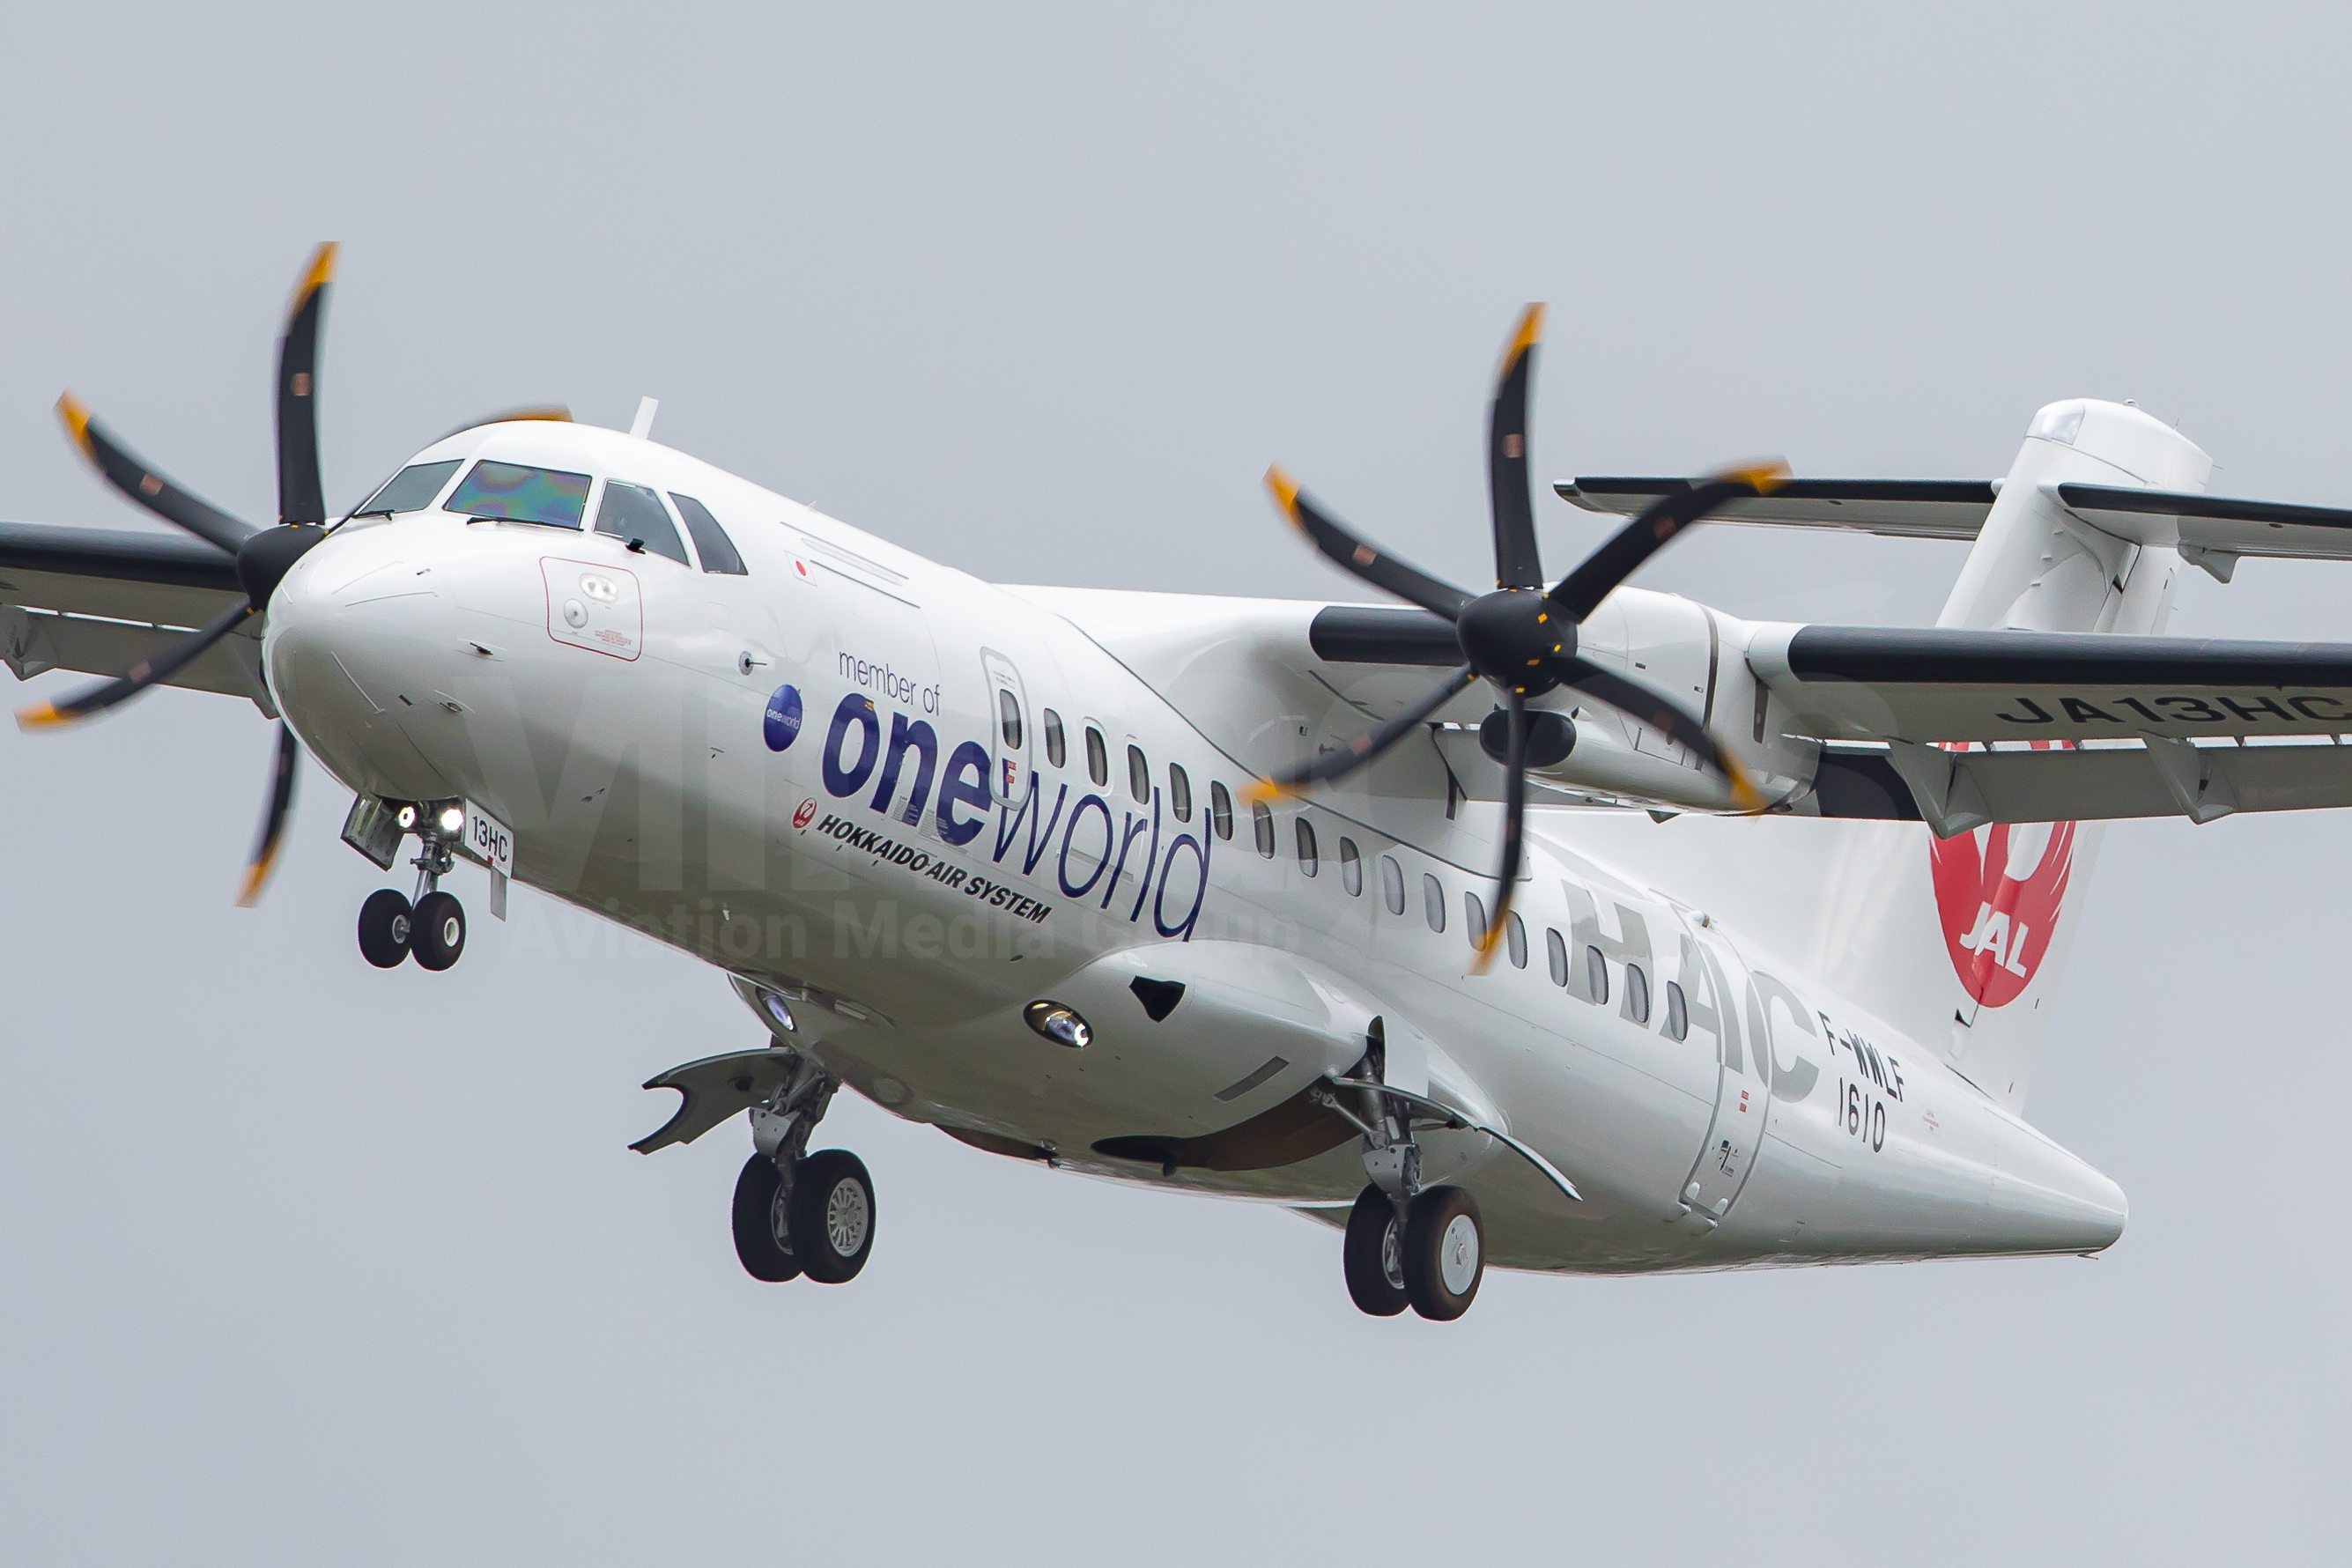 Hokkaido Air Systrn ATR-42 oneworld